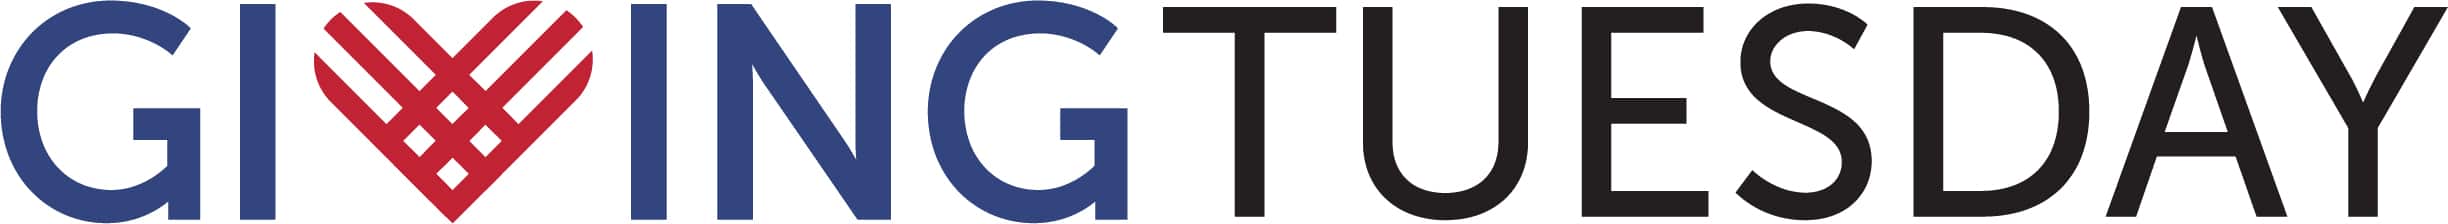 alt=Logo of Giving Tuesday